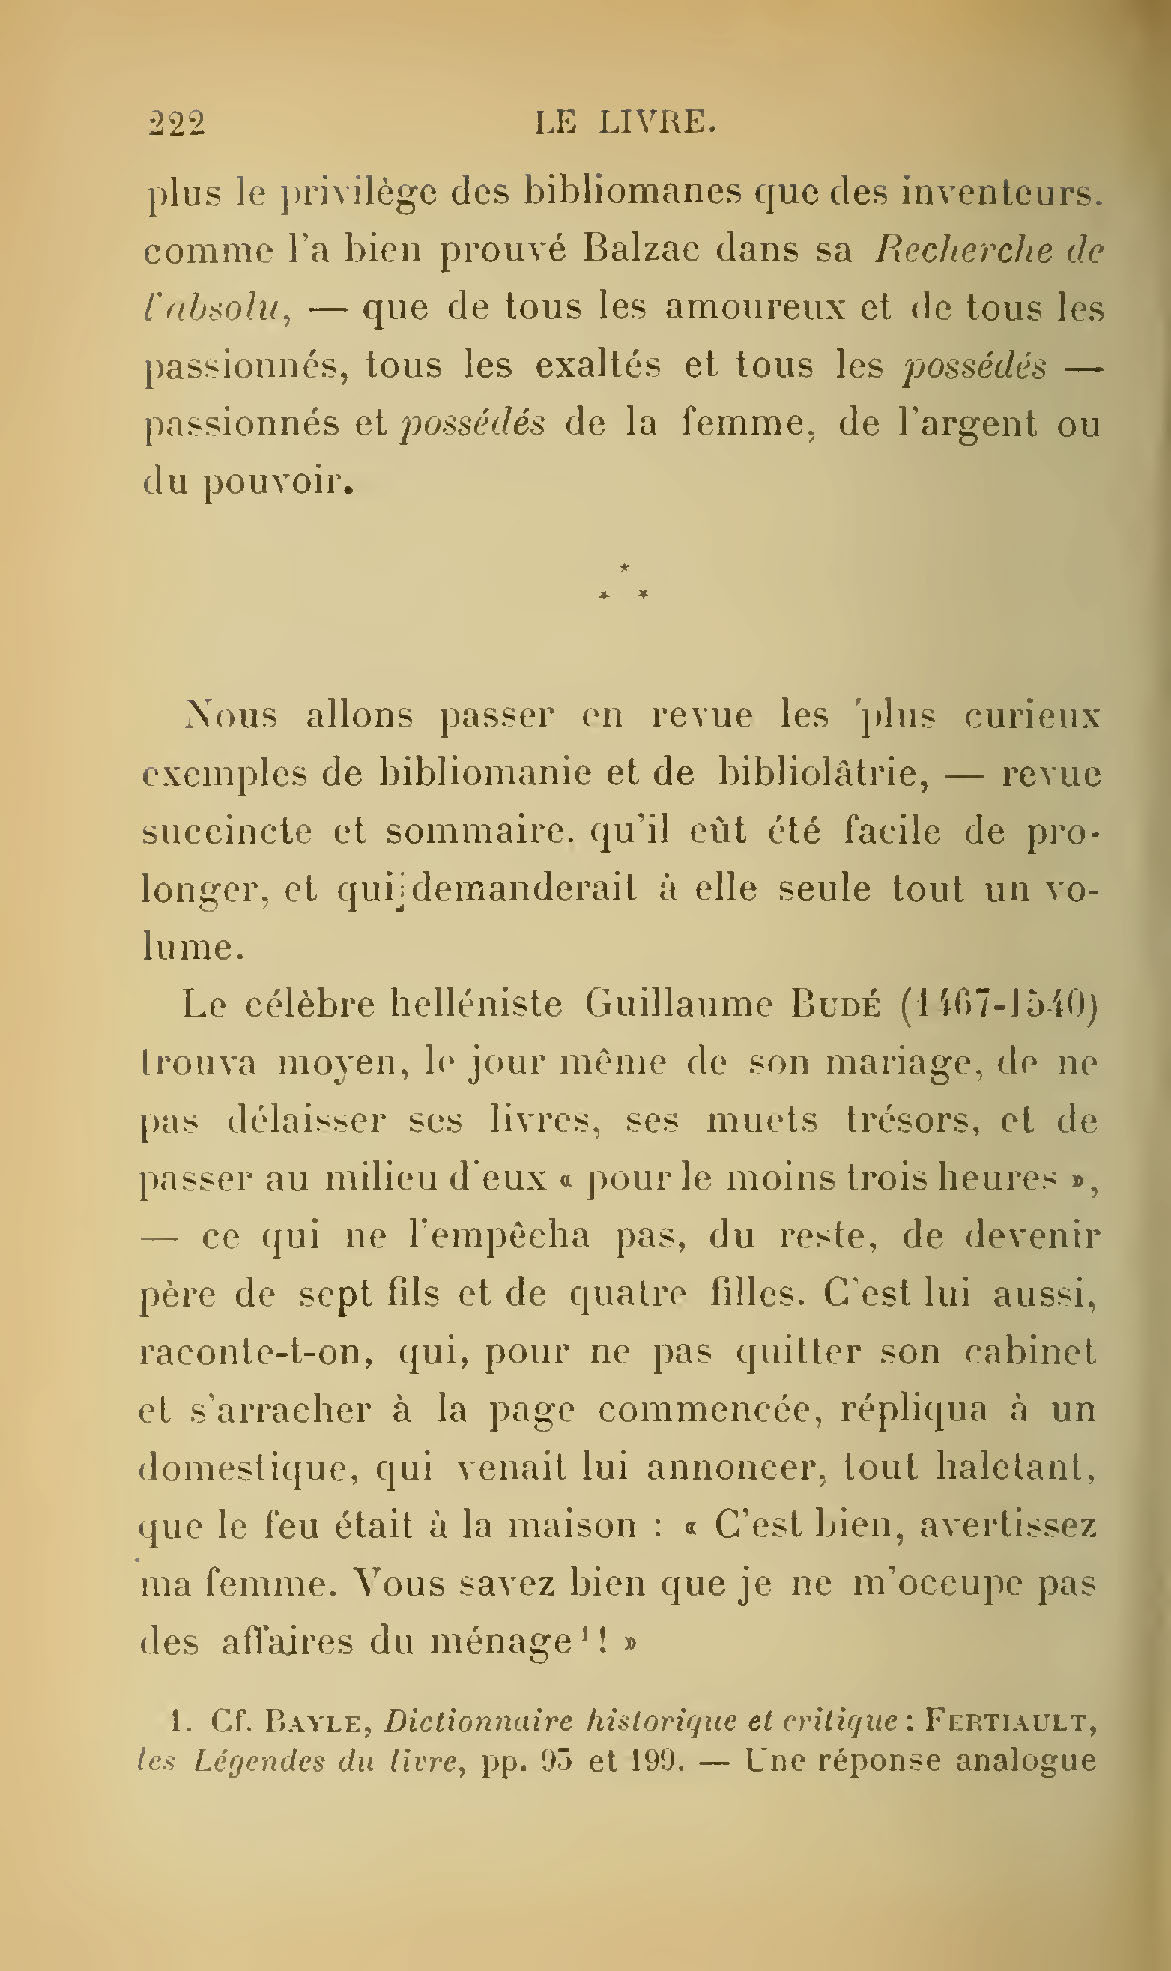 Albert Cim, Le Livre, t. II, p. 222.